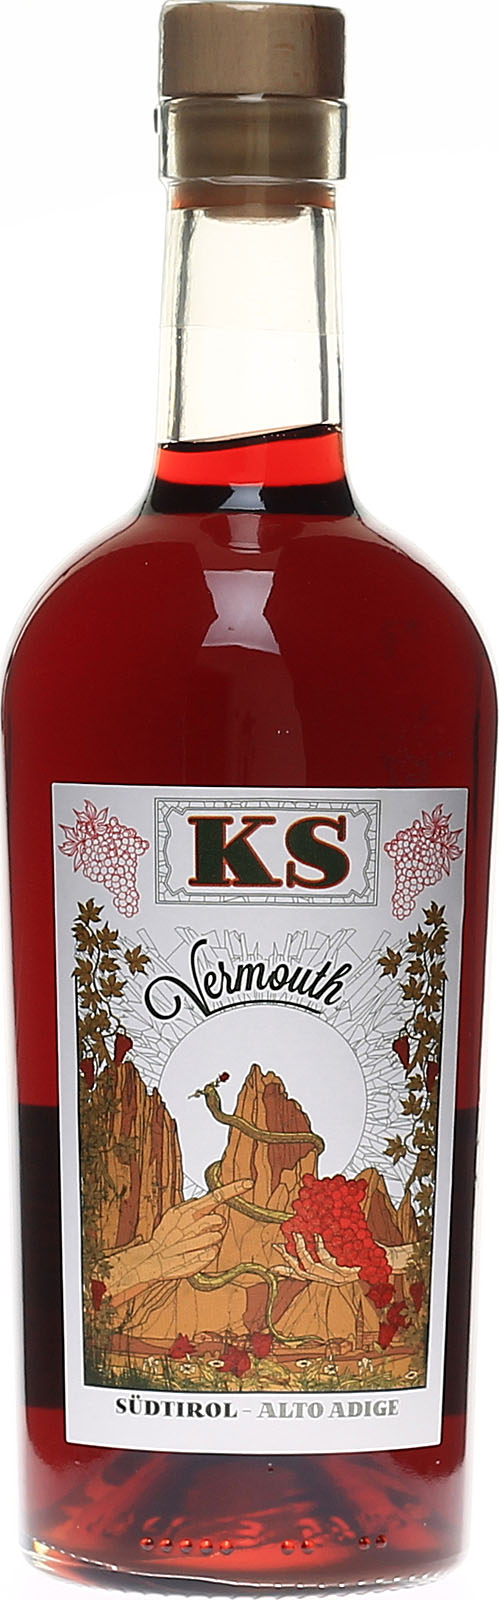 KS Vermouth rot, Roner roter Vermouth hervorragender